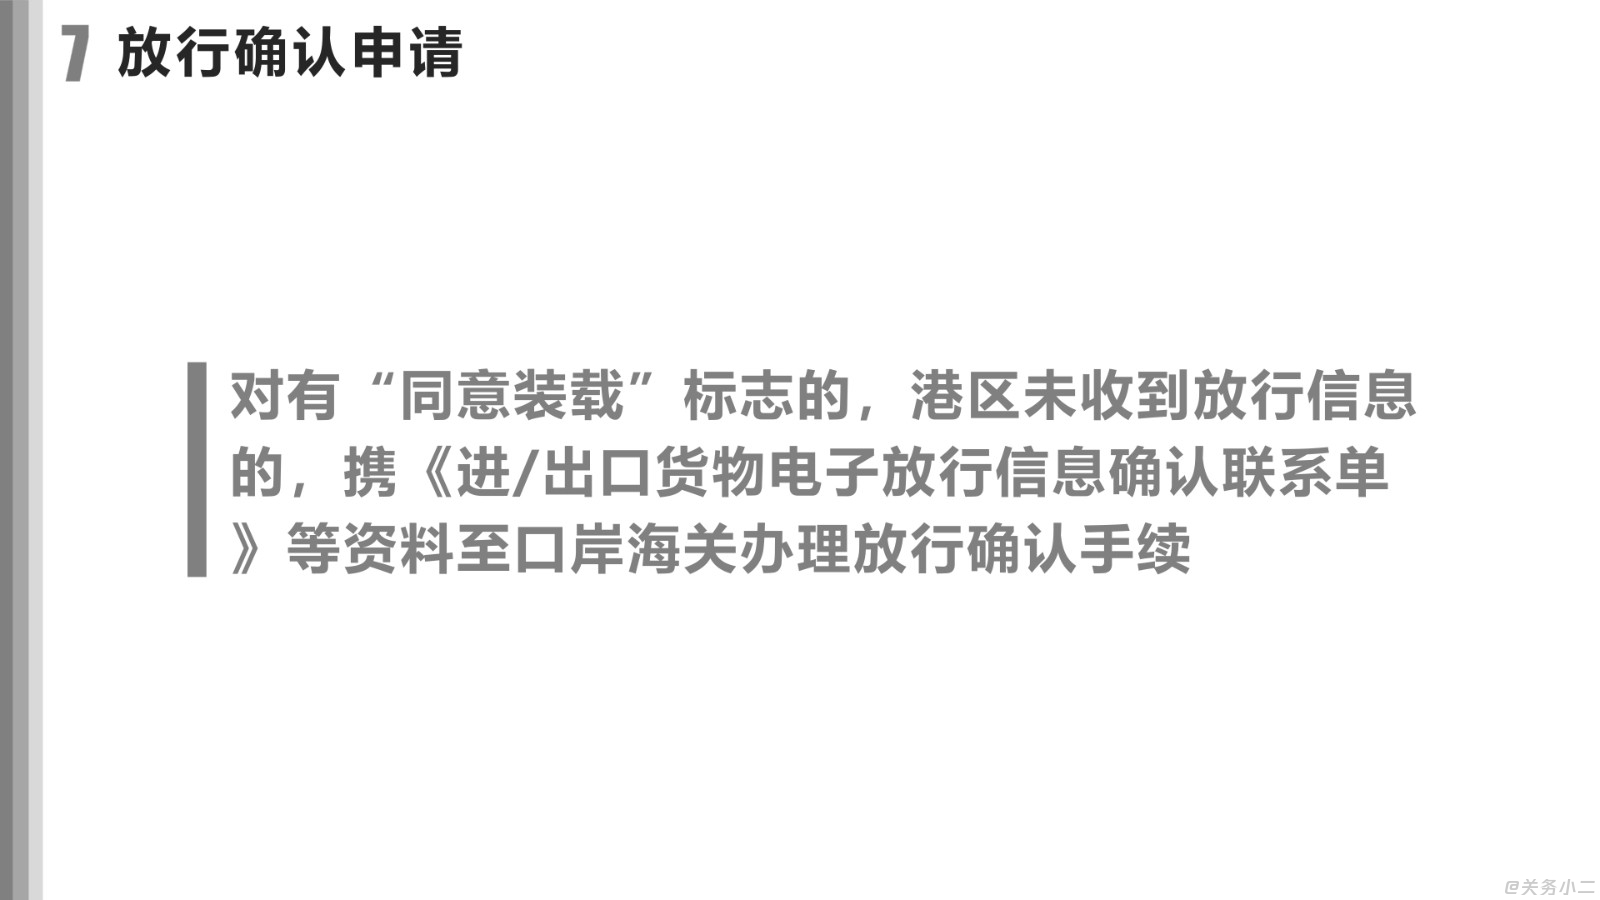 PPT-上海海关海运出口放行信息切换安排宣贯会_12.jpg